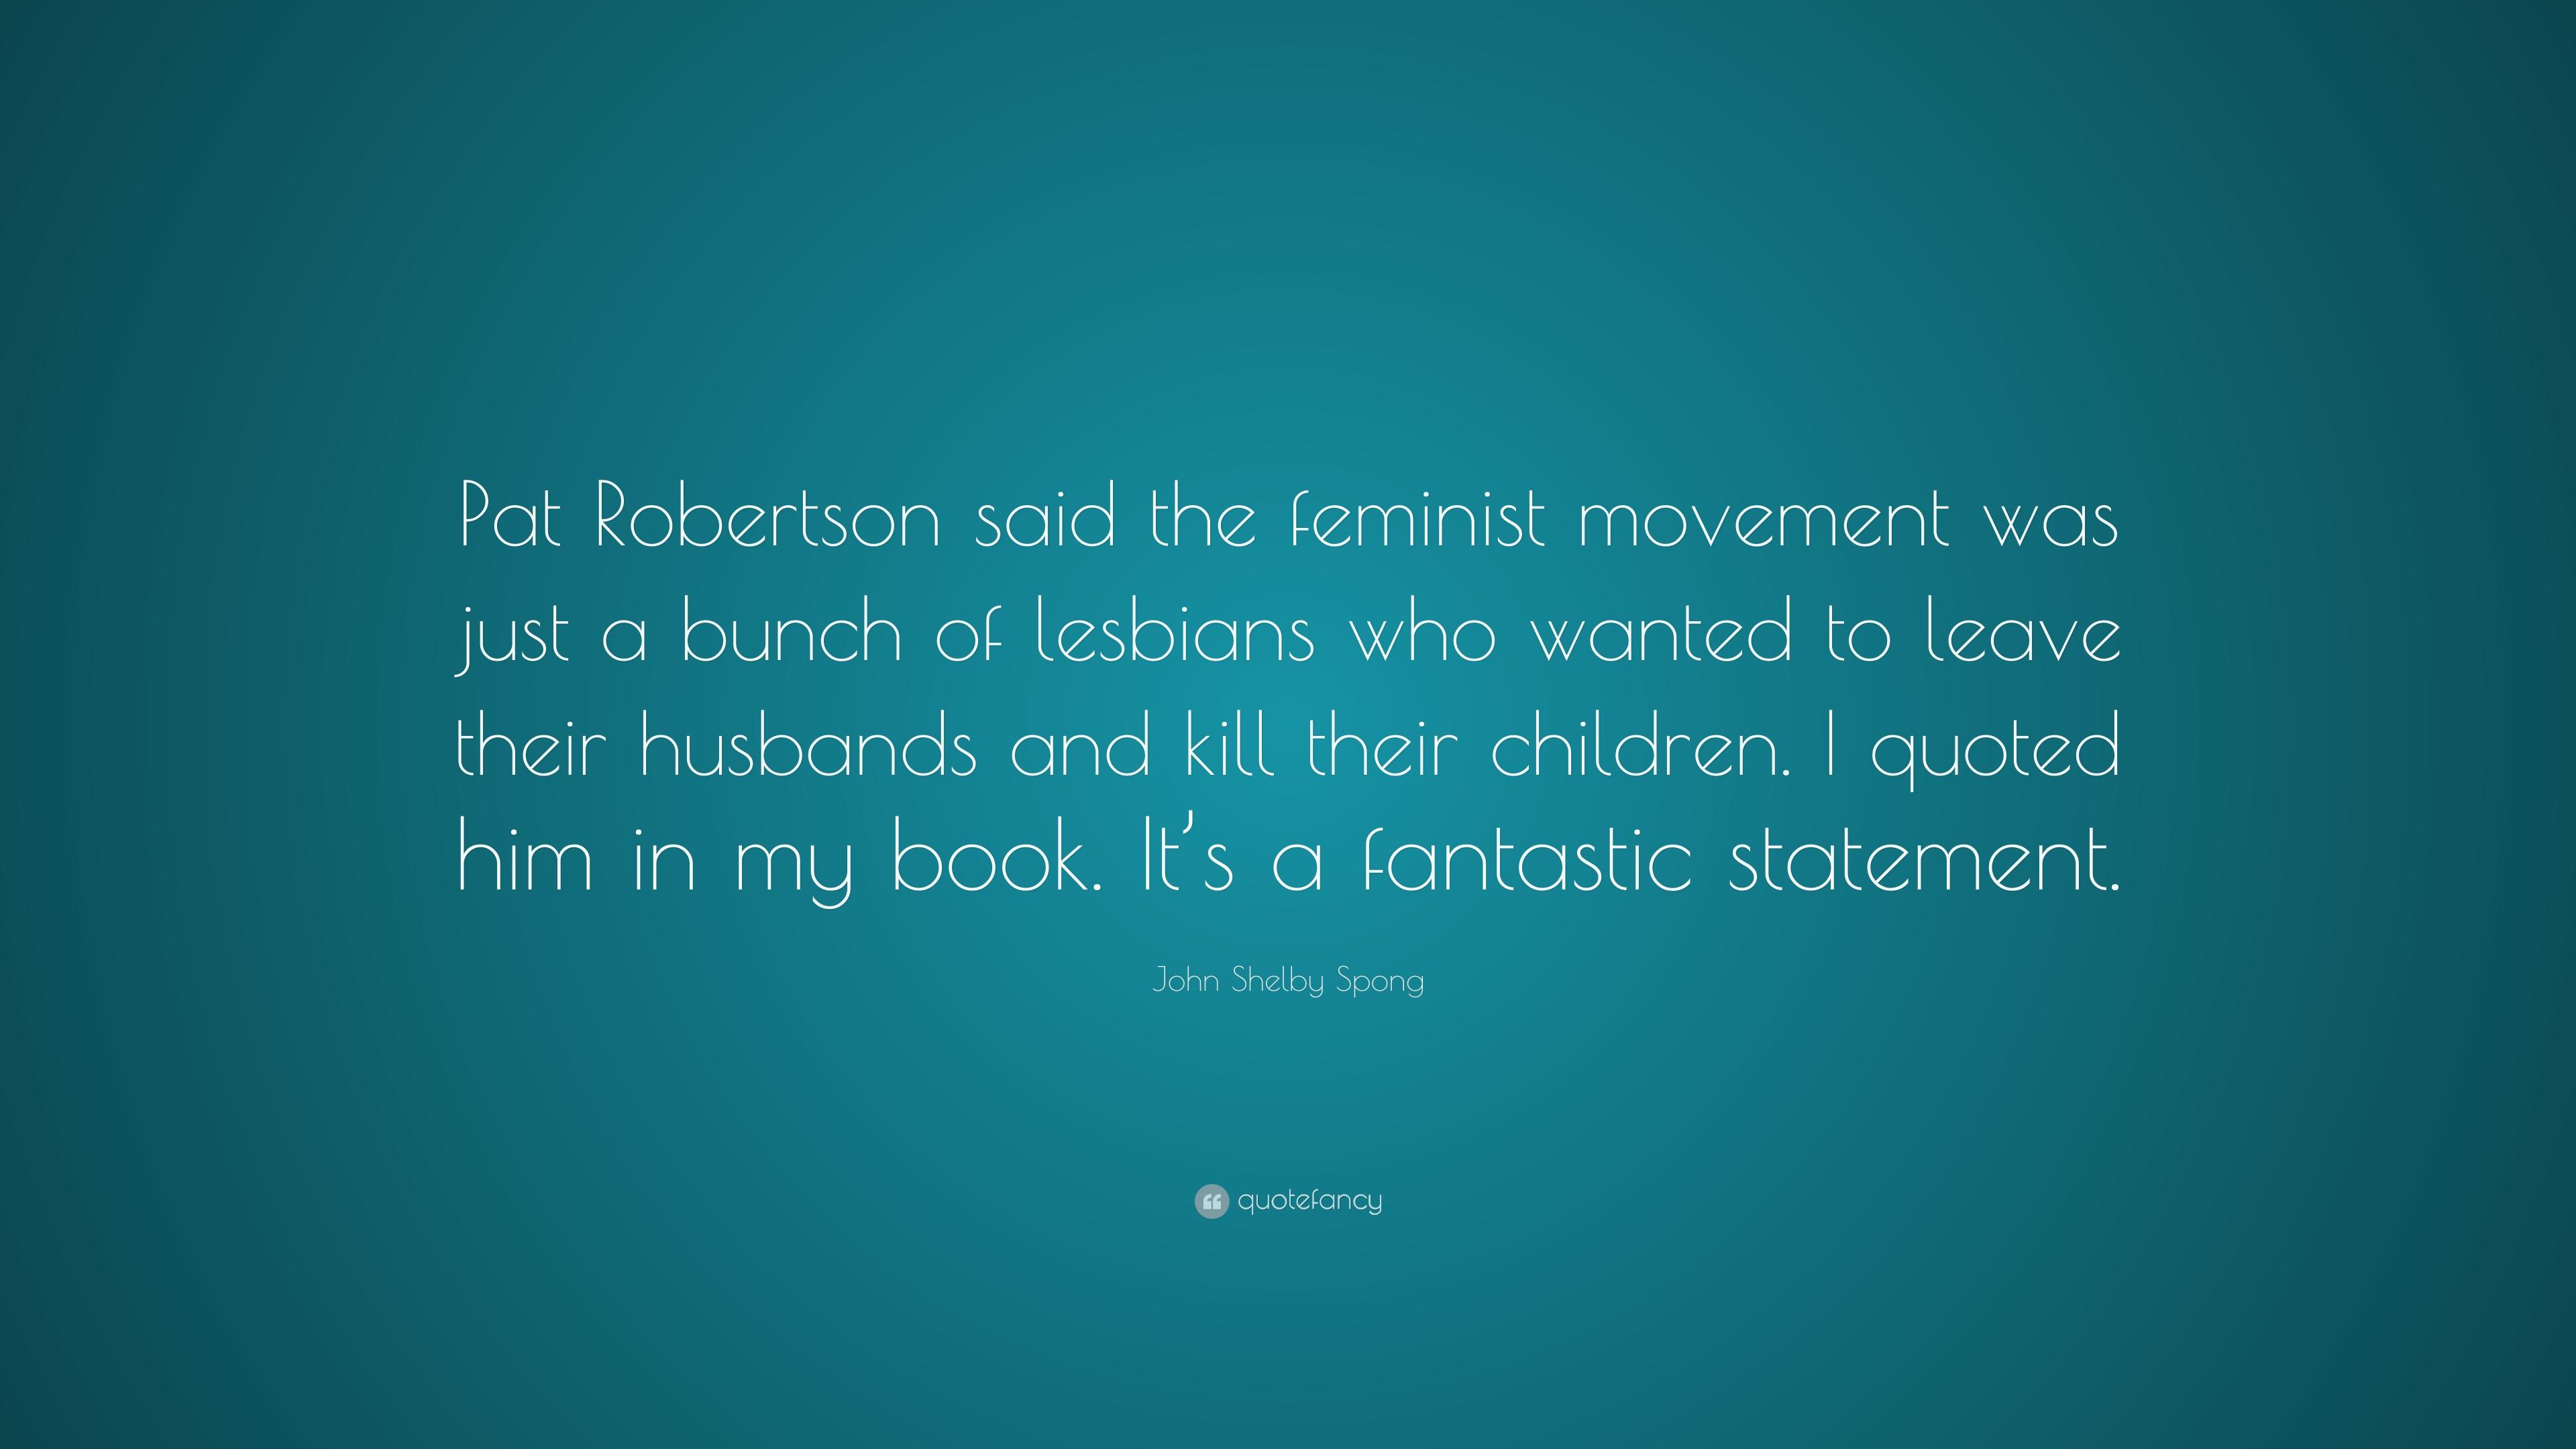 John Shelby Spong Quote: “Pat Robertson said the feminist movement